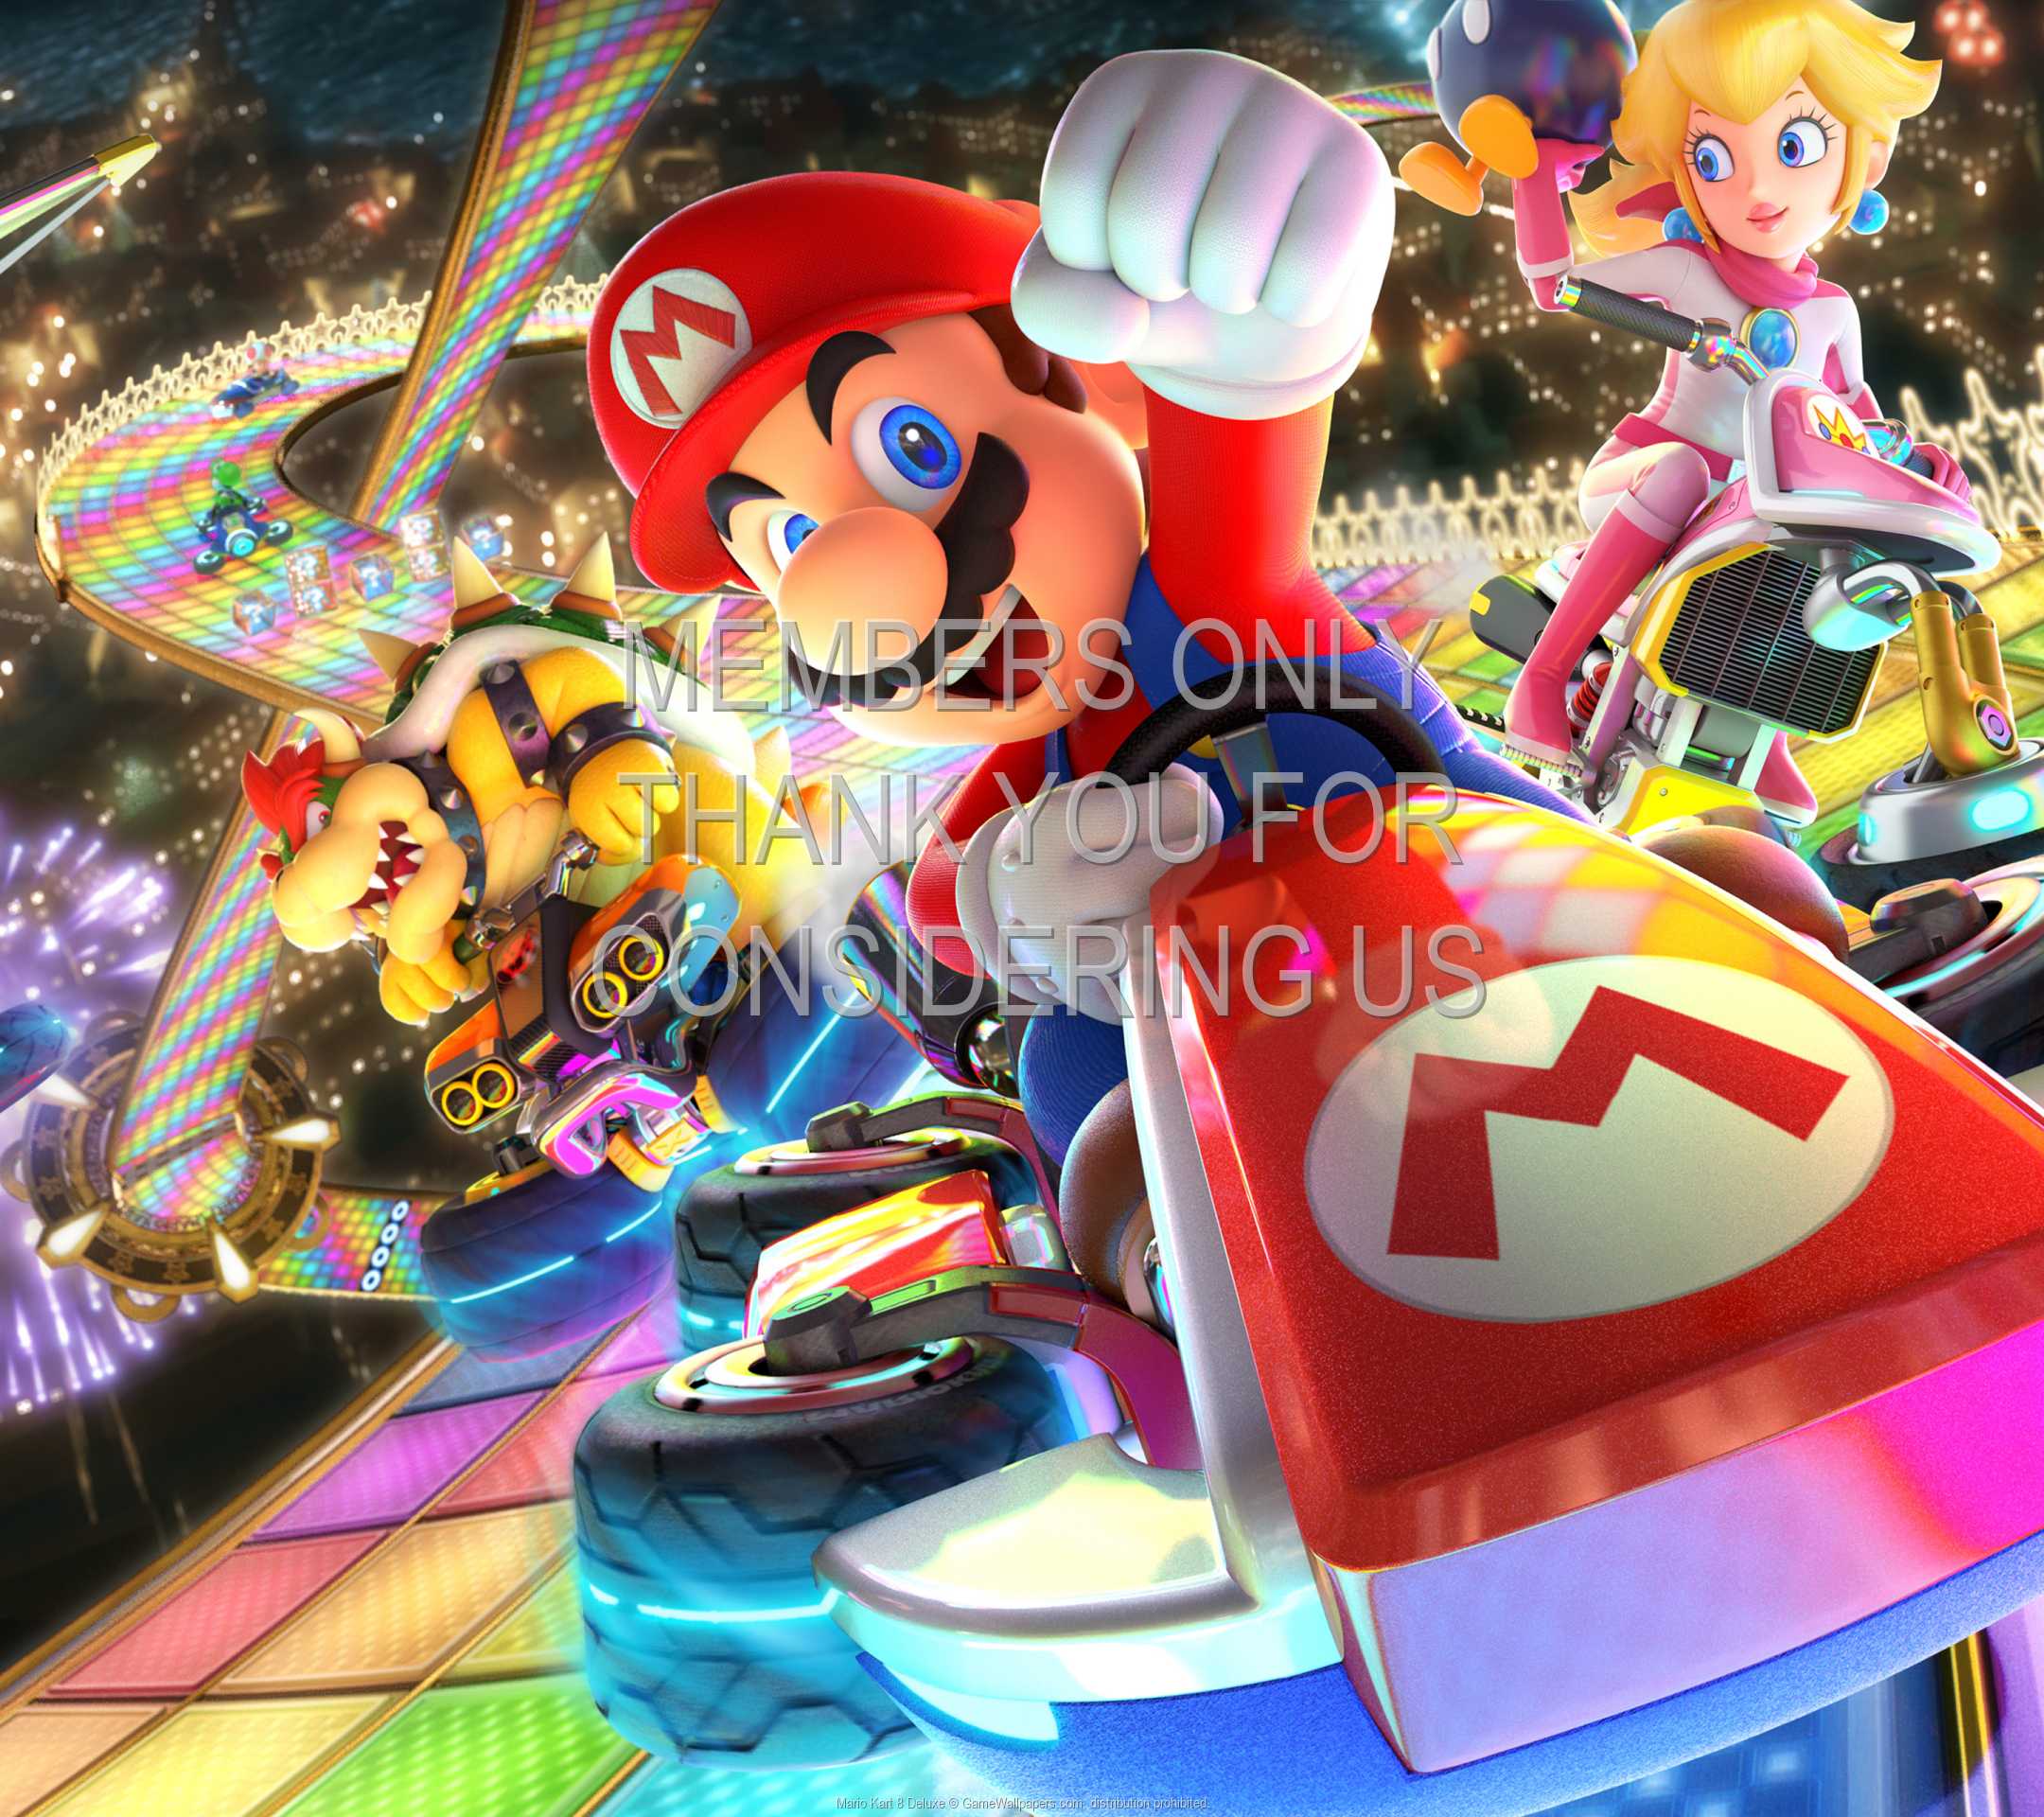 Mario Kart 8 Deluxe 1080p Horizontal Mobile wallpaper or background 01